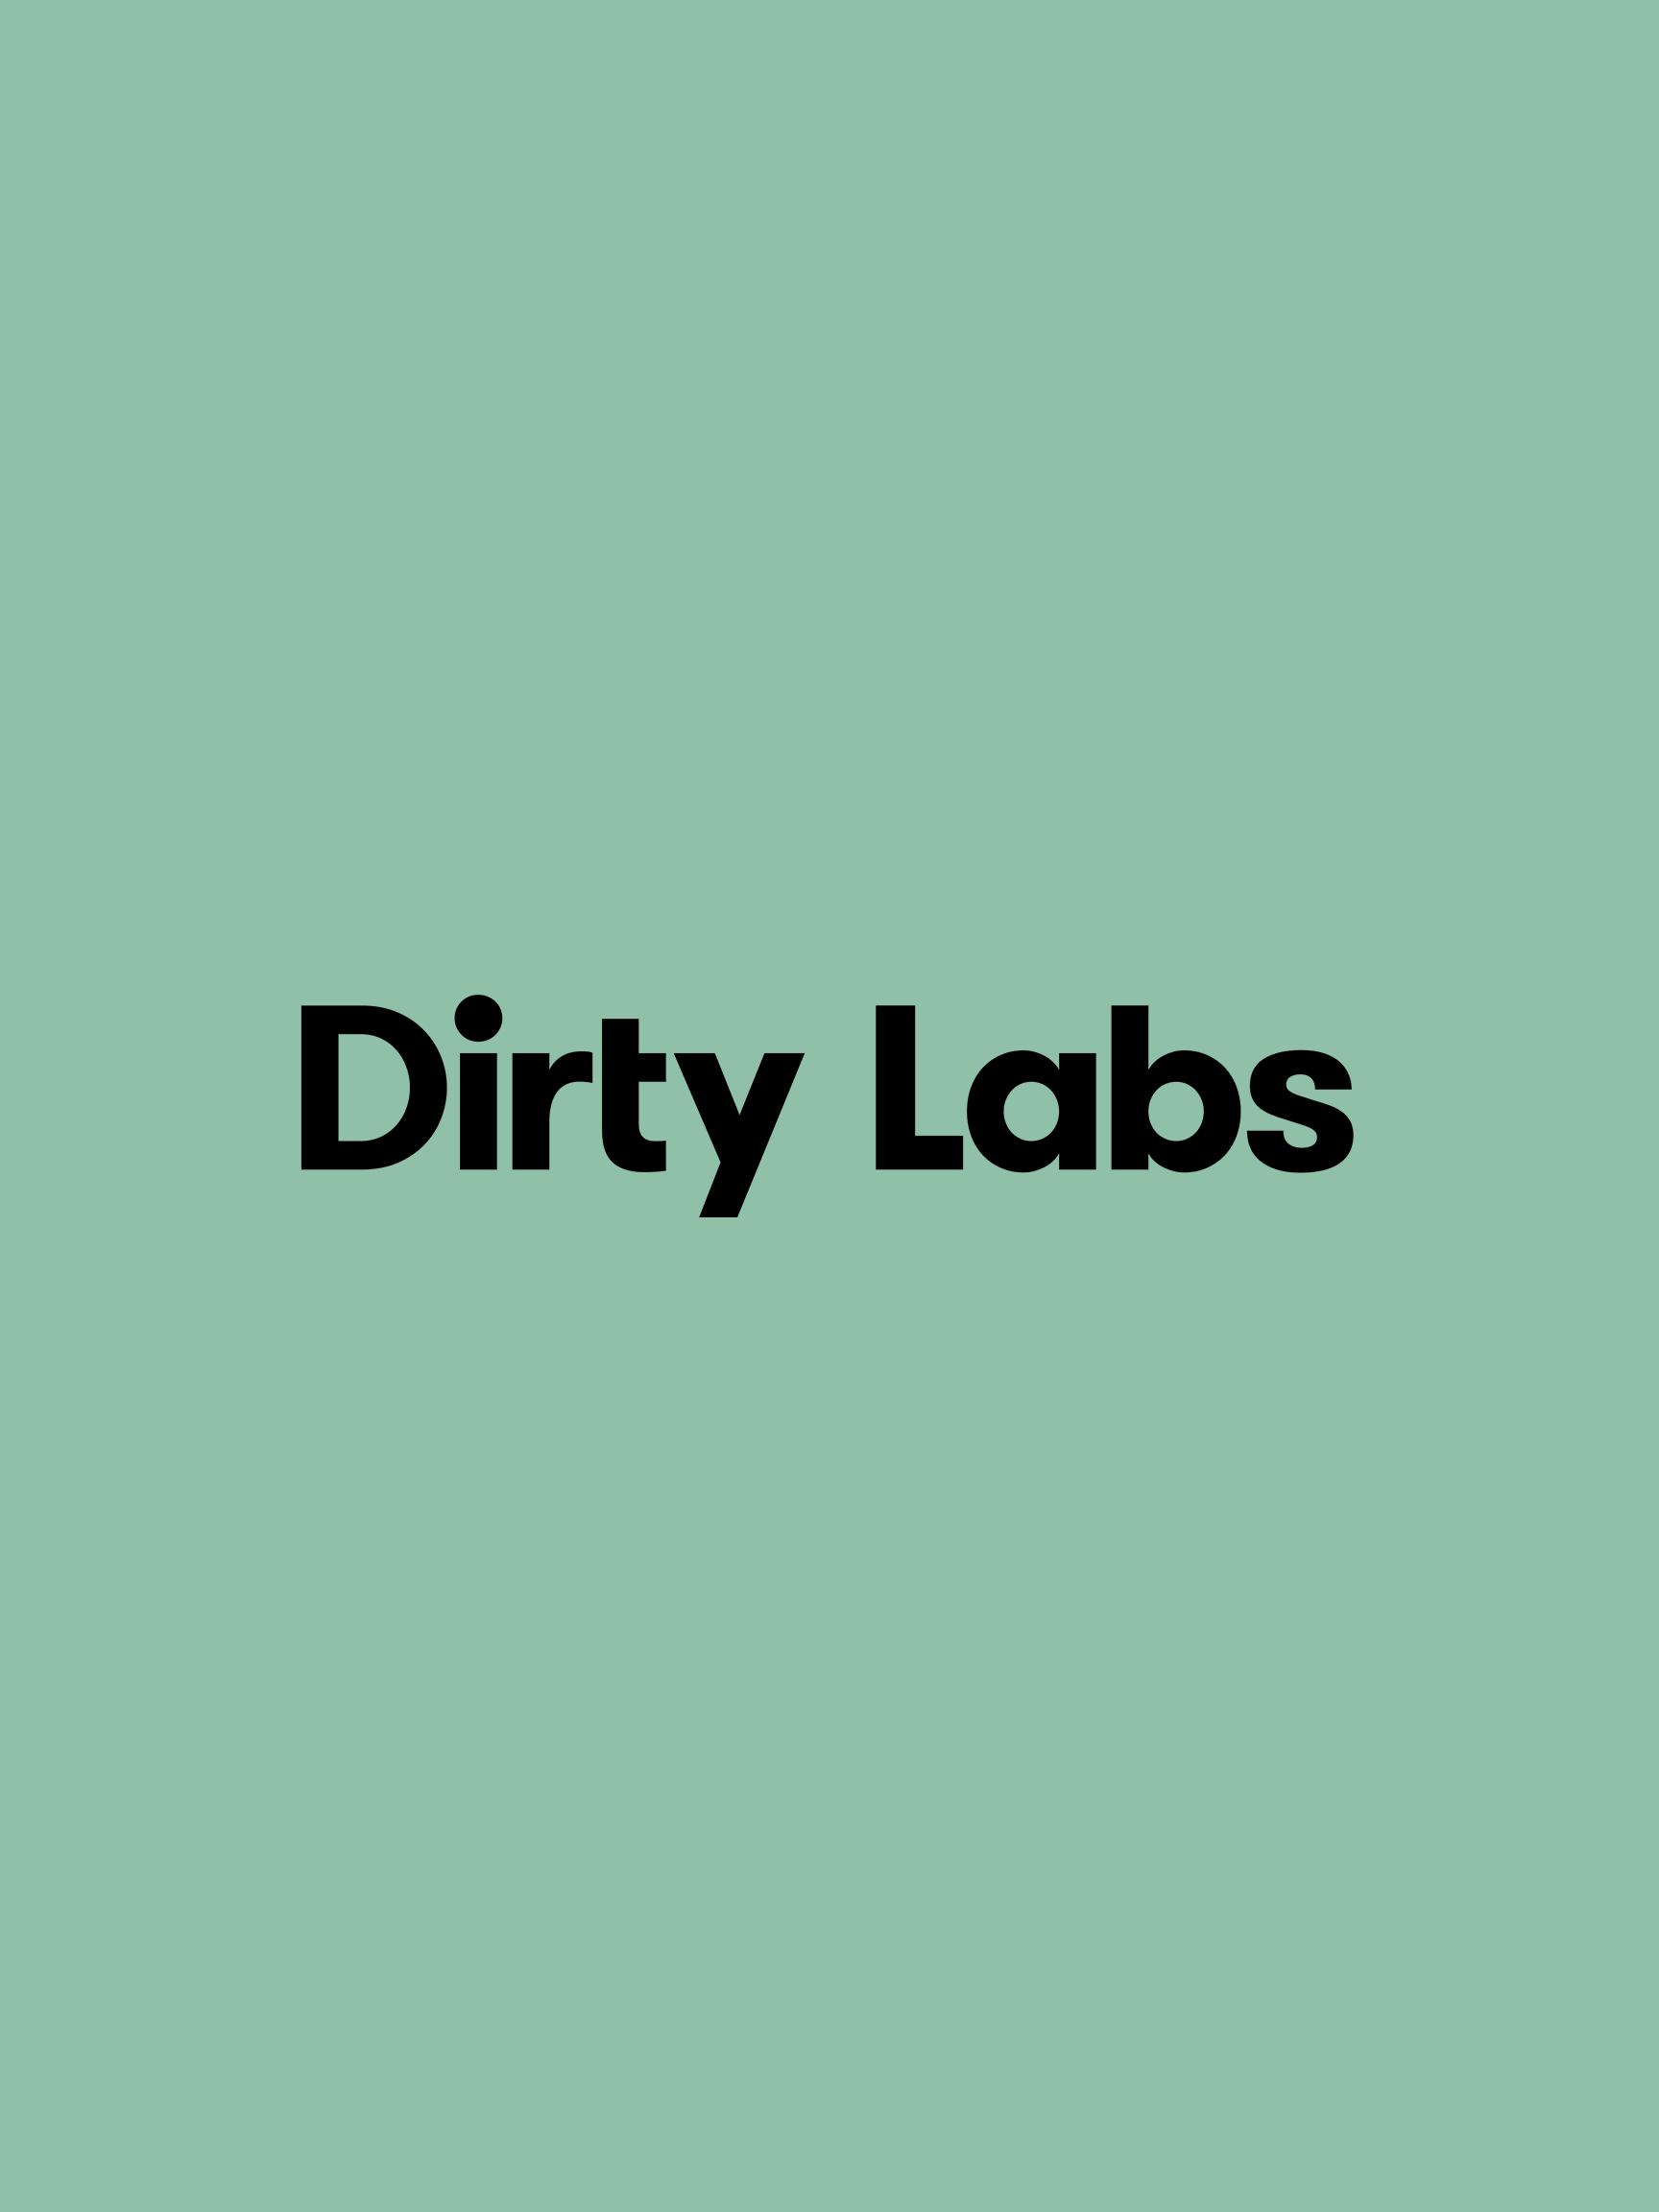 Dirtylabs logo 2x